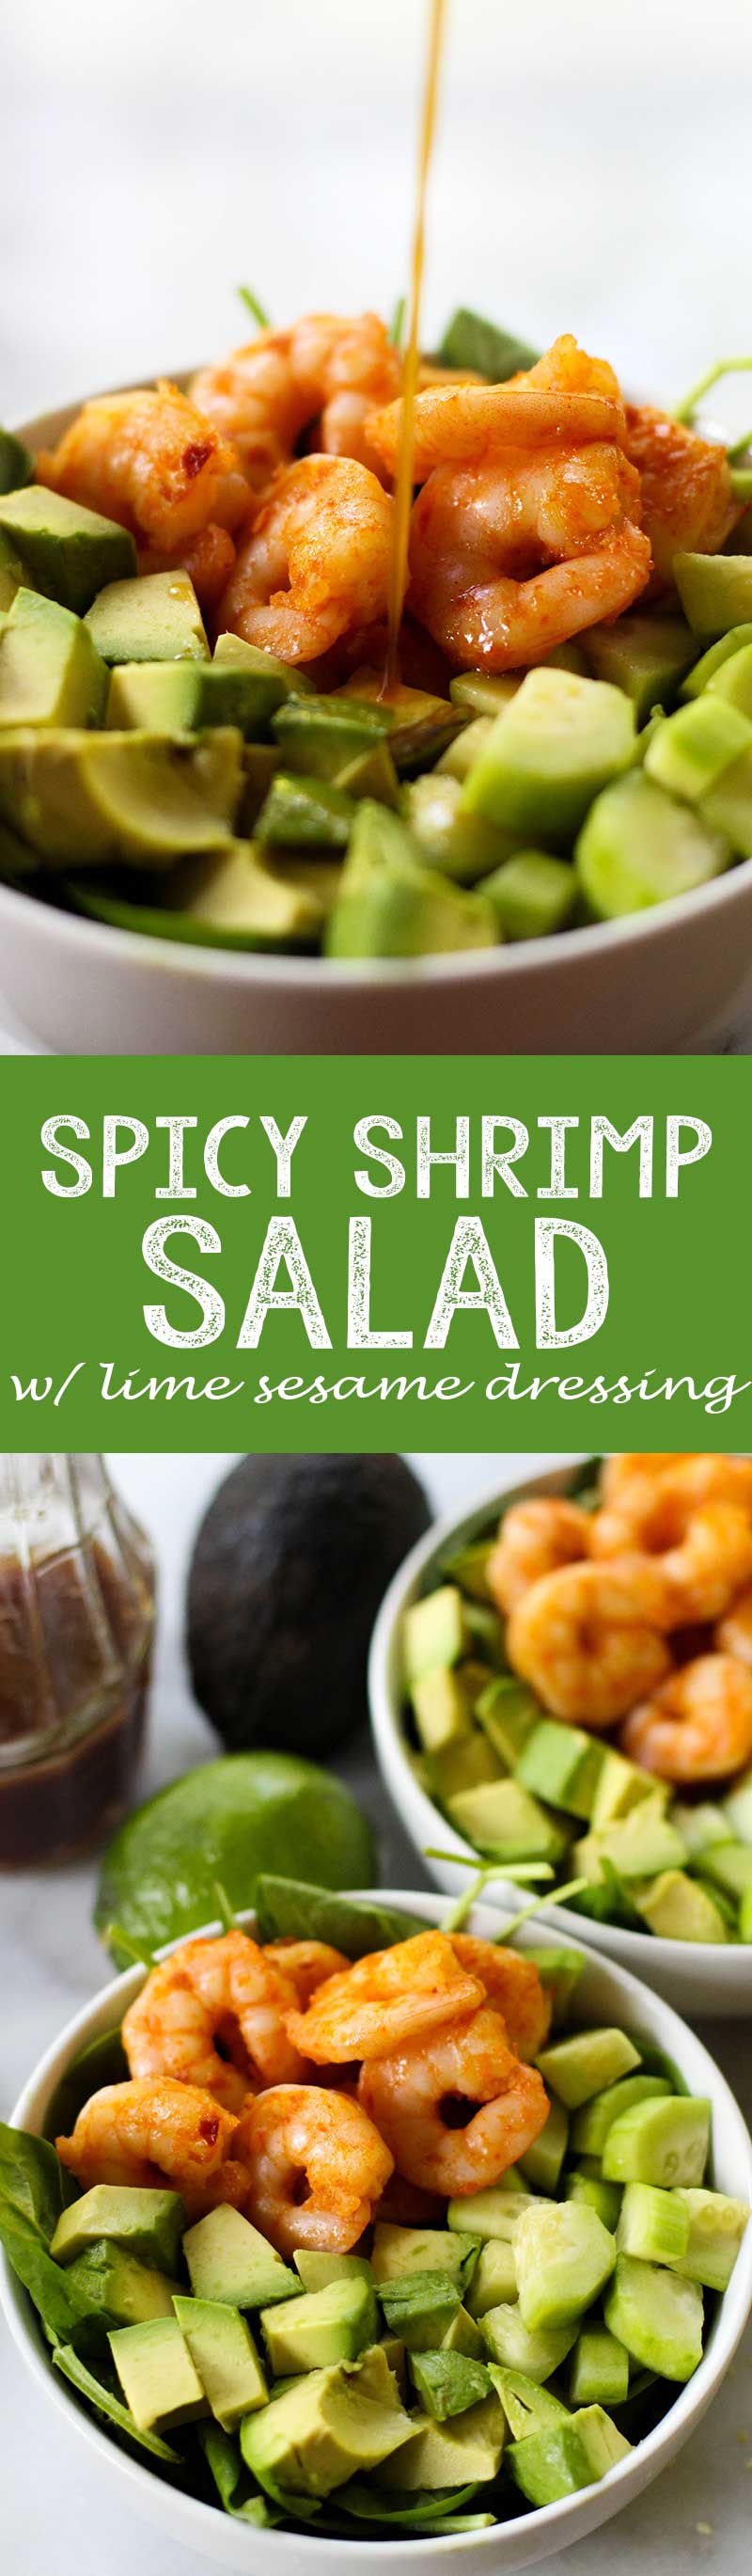 Spicy Shrimp Salad with lime sesame dressing